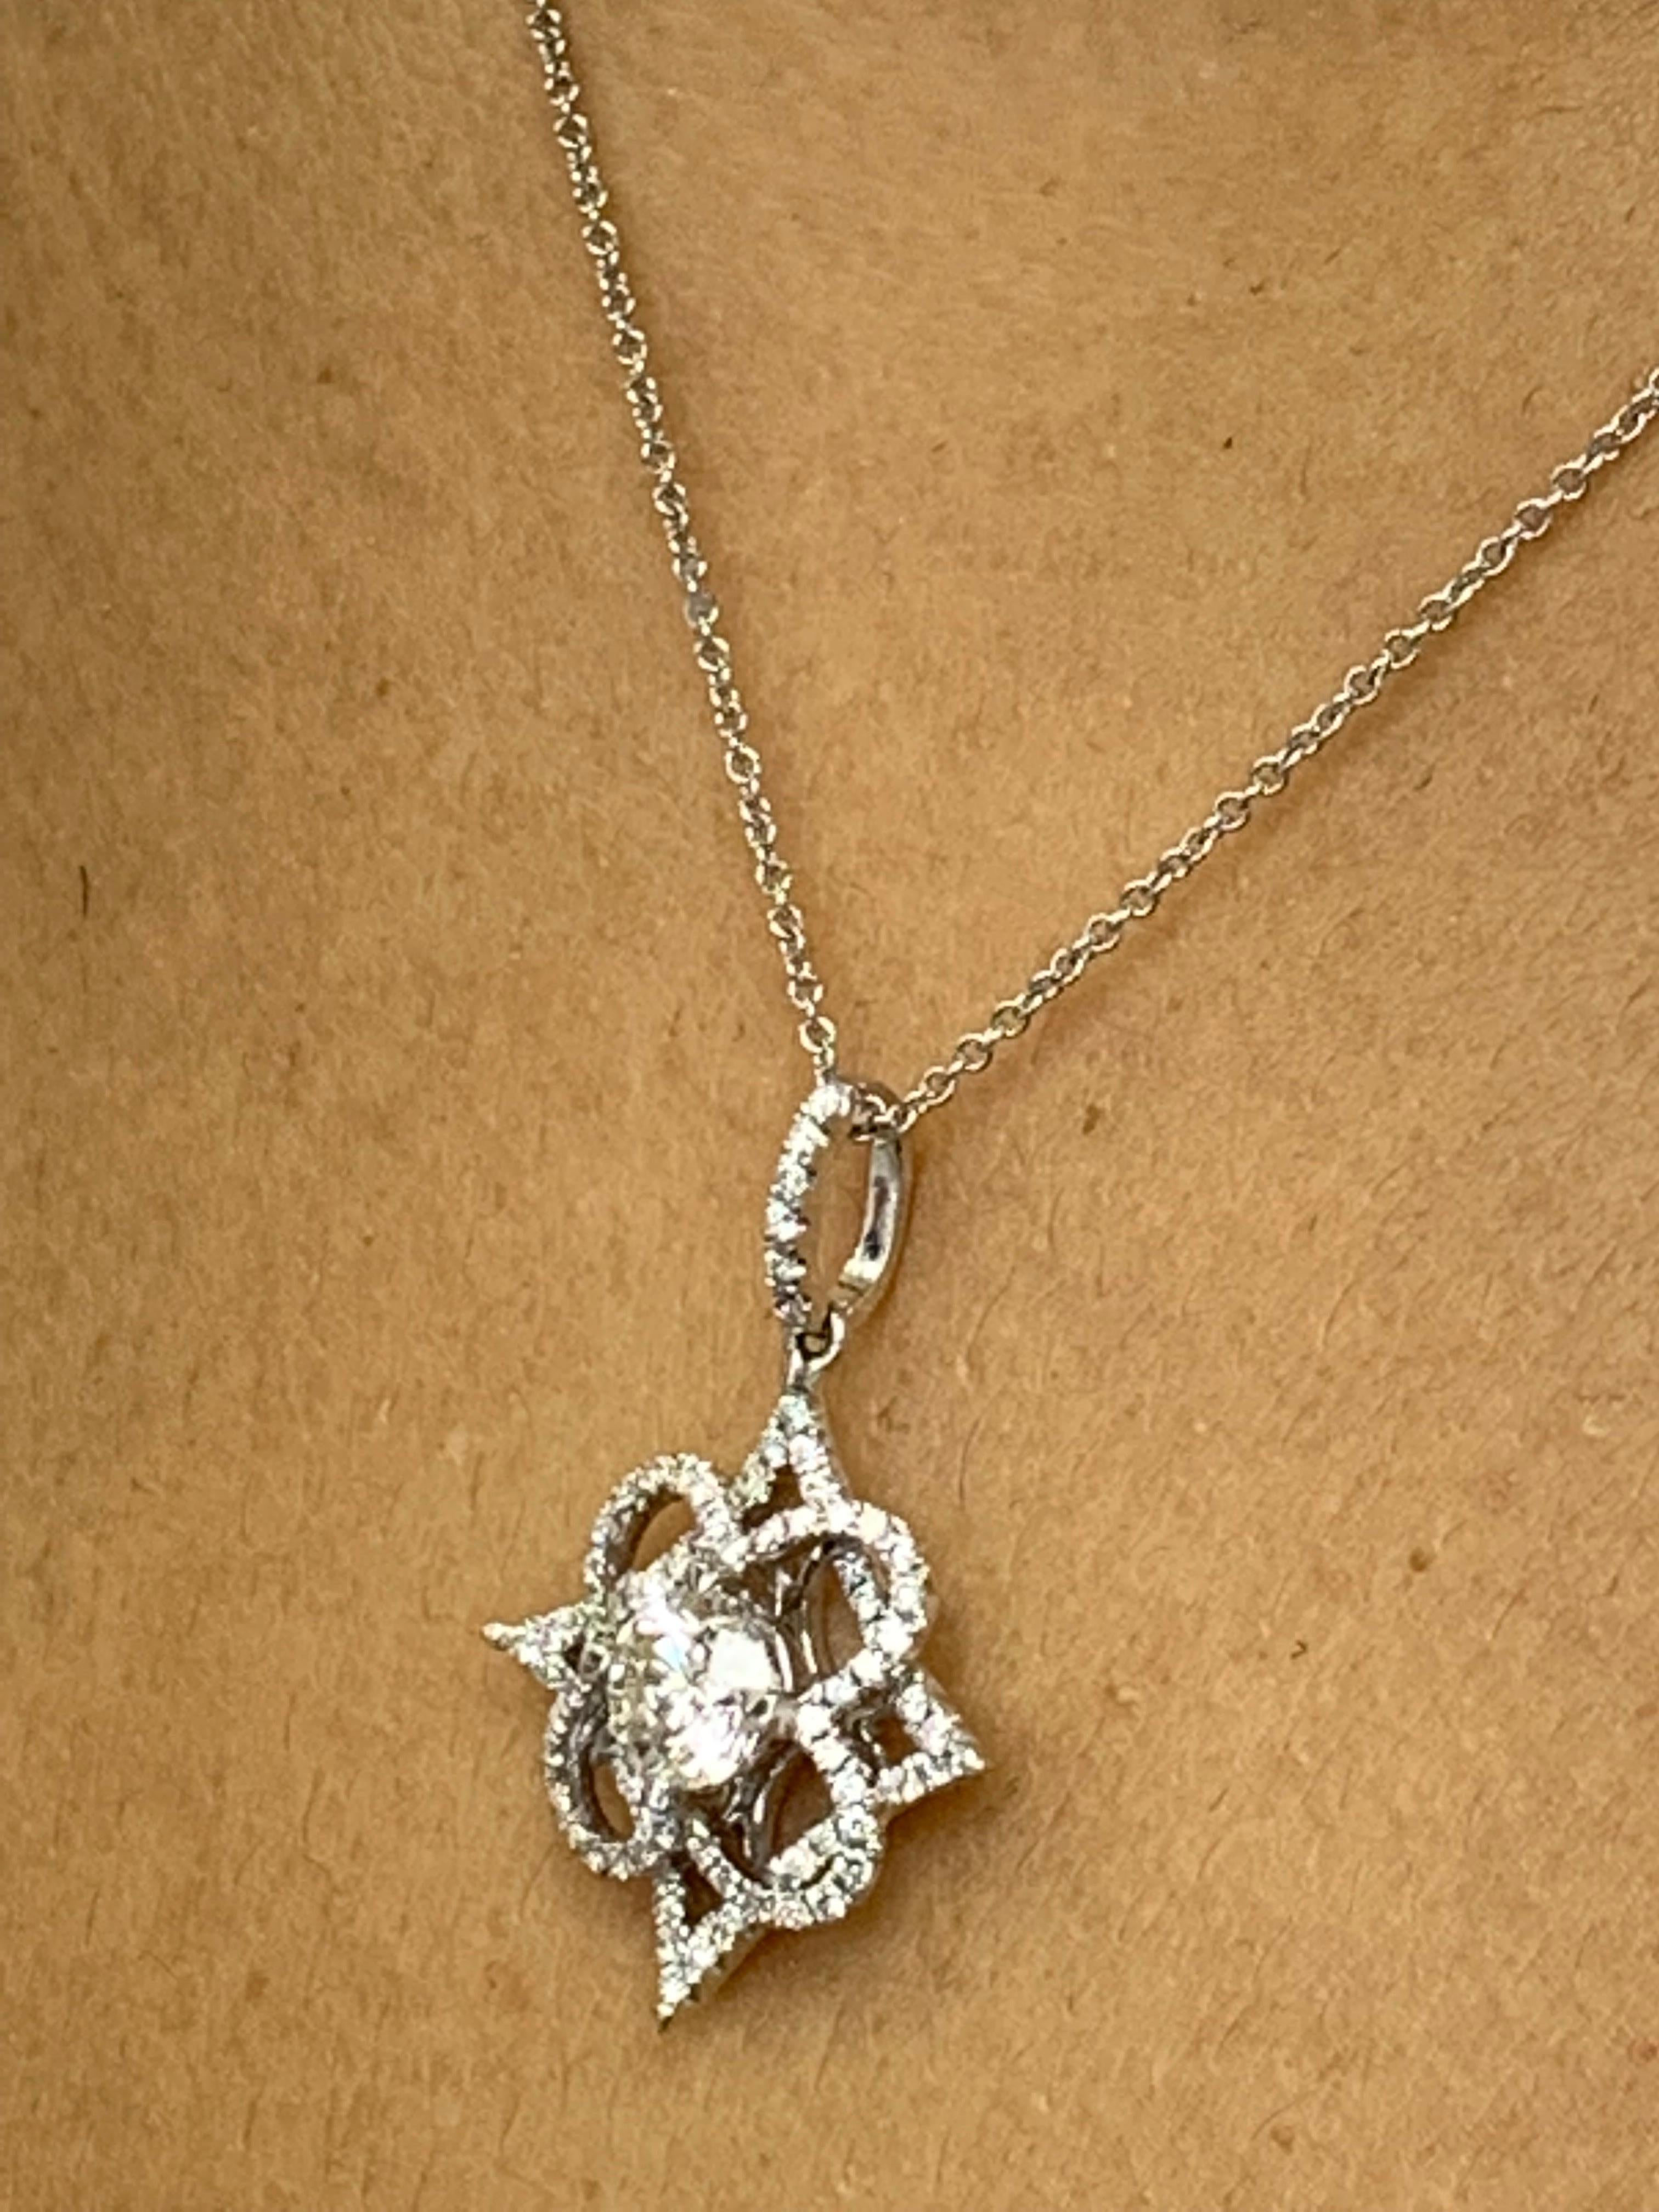 Garndeur 0.64 Carat Round Cut Diamond Pendant in 18K White Gold For Sale 7